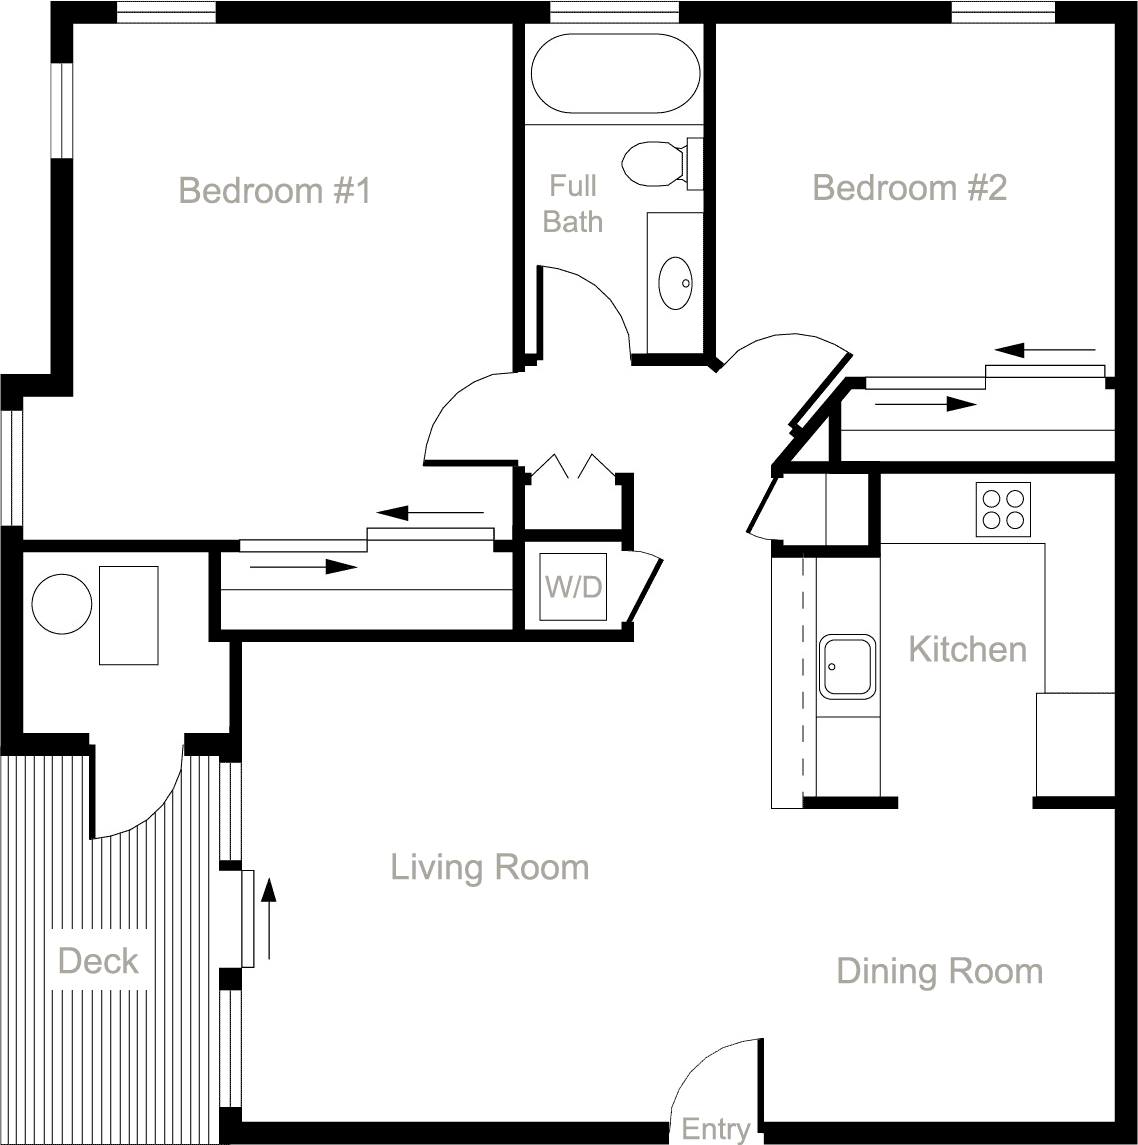 1st Floor Plan - The Nashua (Upper)